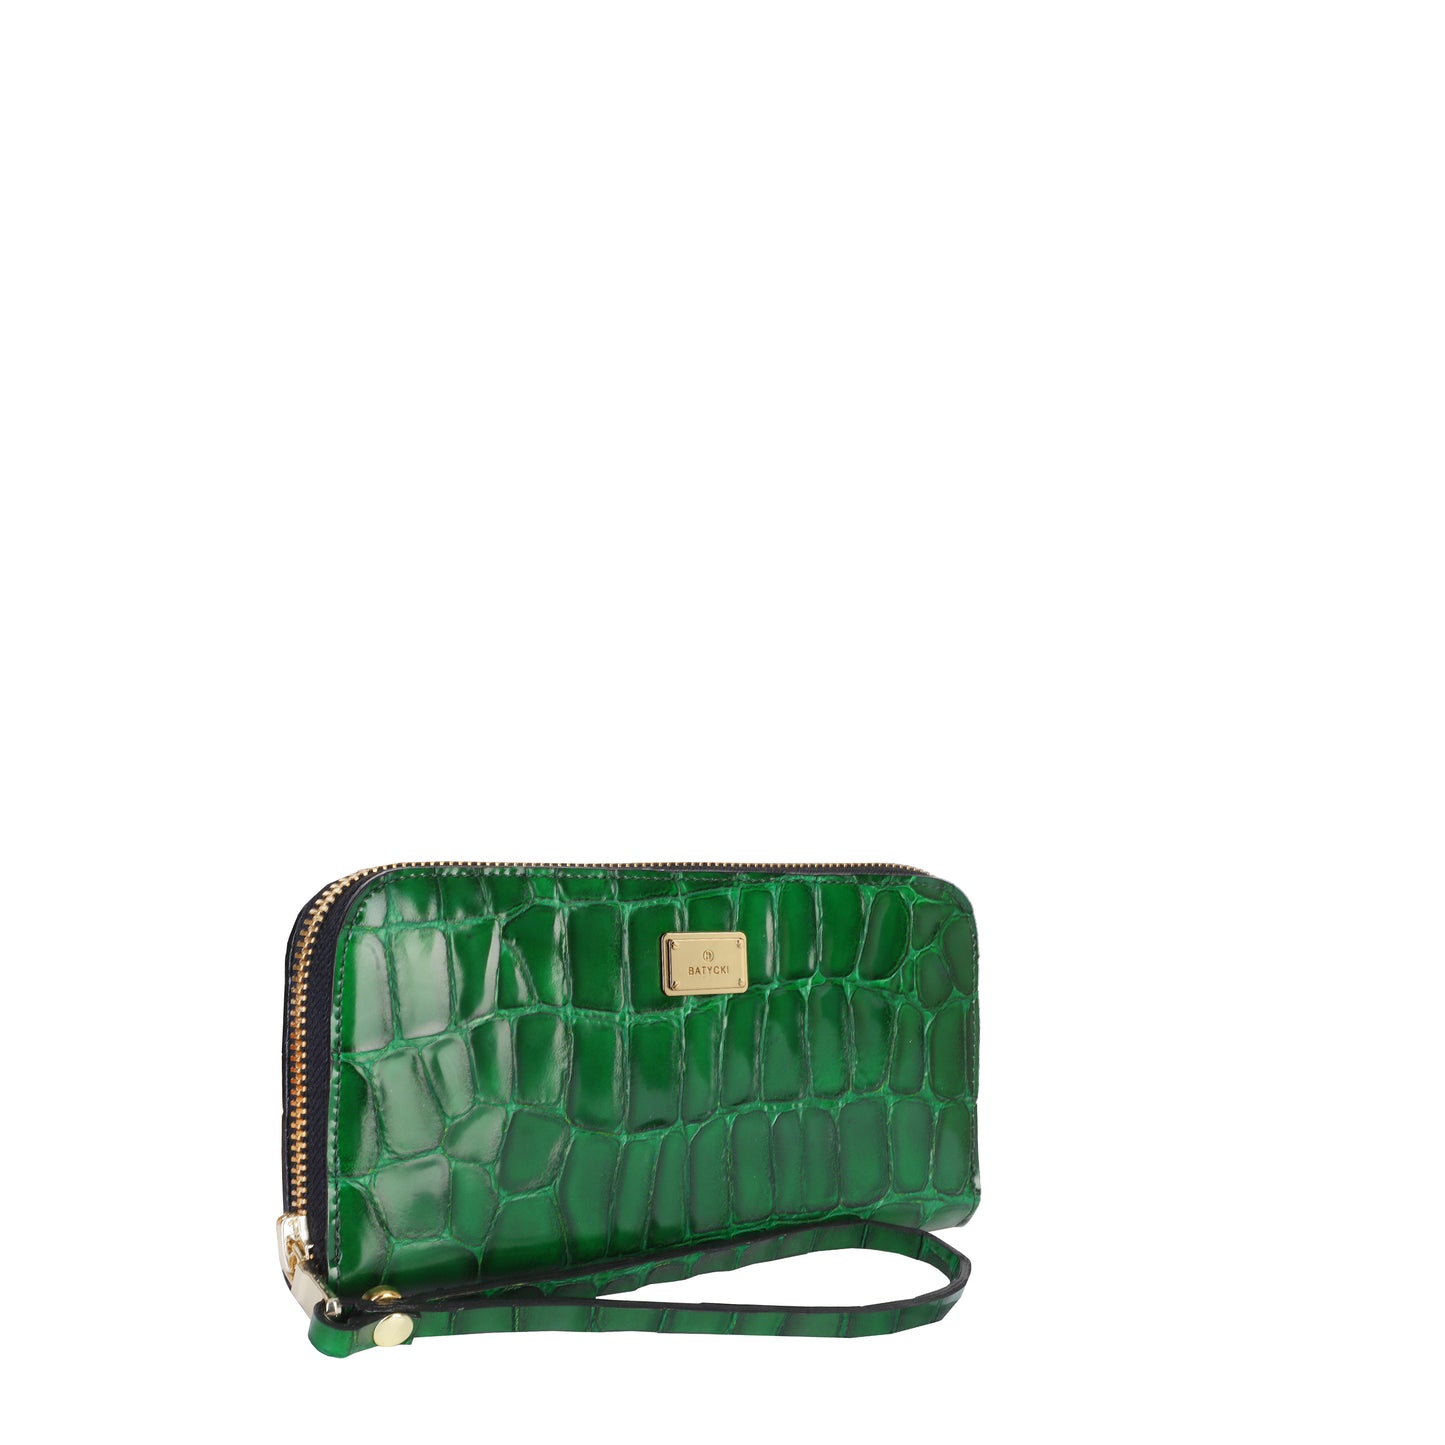 CUCA MATE green women's leather wallet